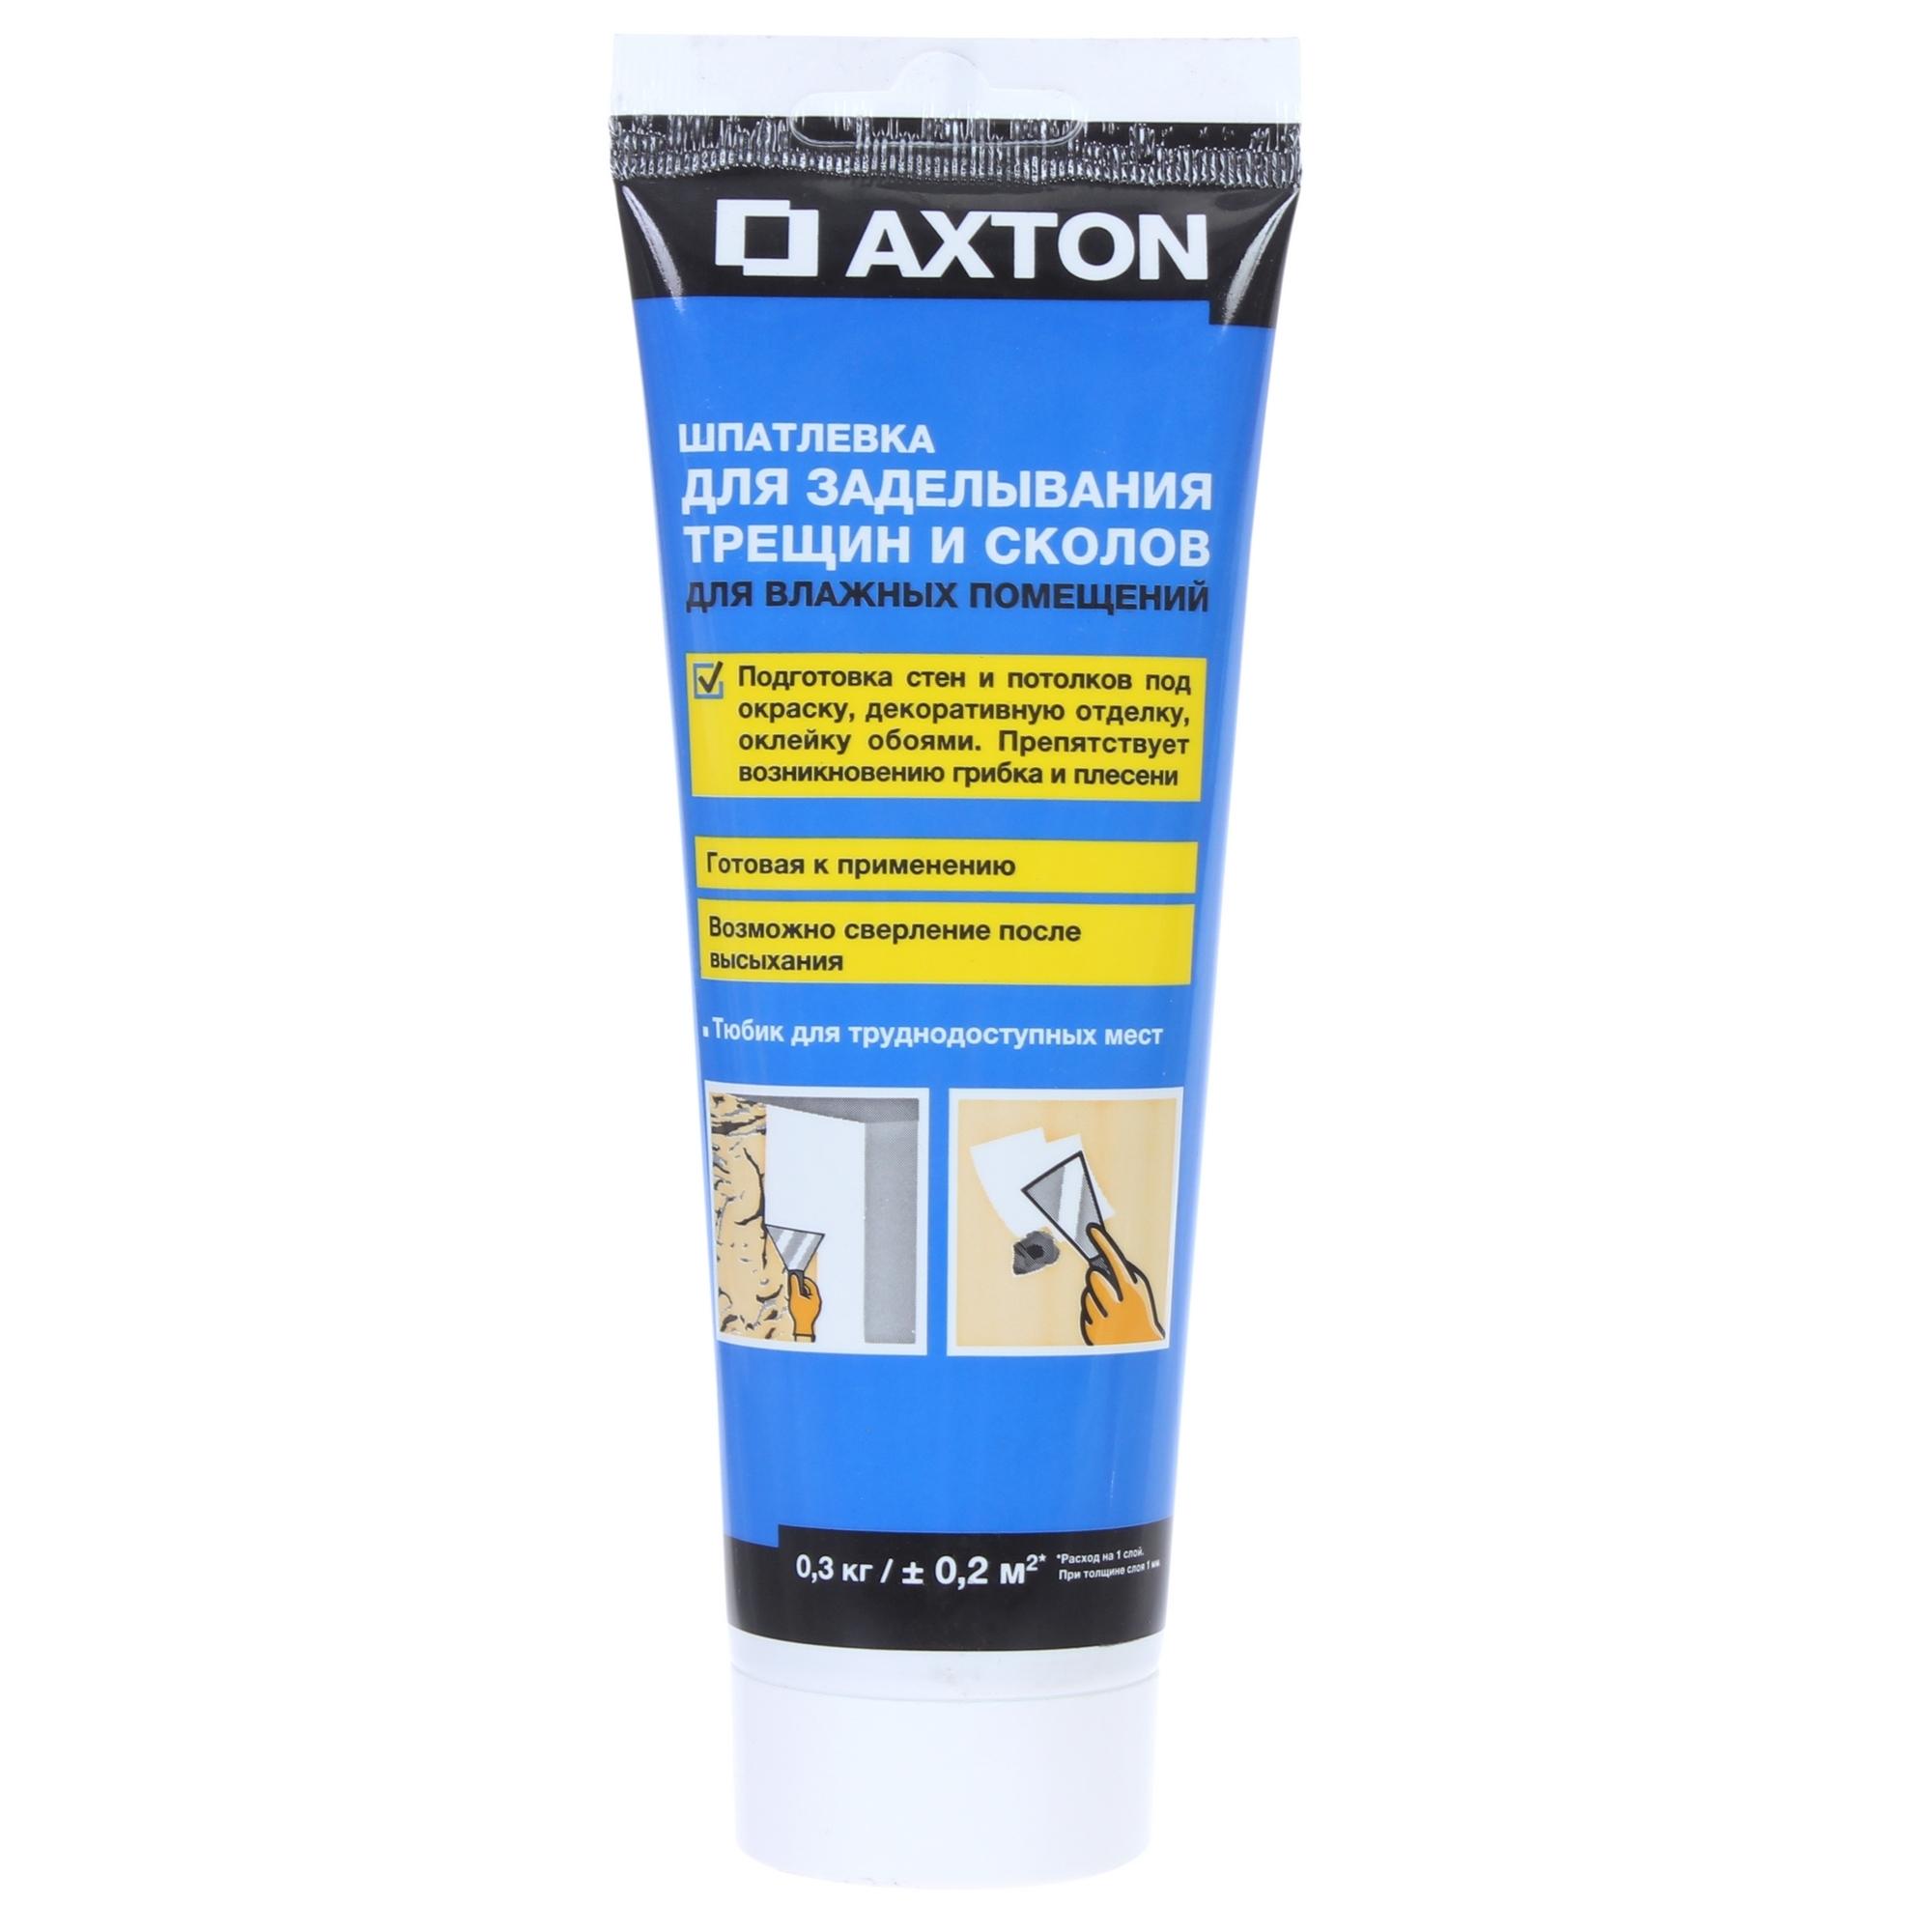 Трещин цена. Шпатлёвка финишная Axton для влажных помещений. Шпатлевка Axton полимерная. Semin шпаклевка для влажных помещений. Шпатлевка по дереву Axton белая смола.